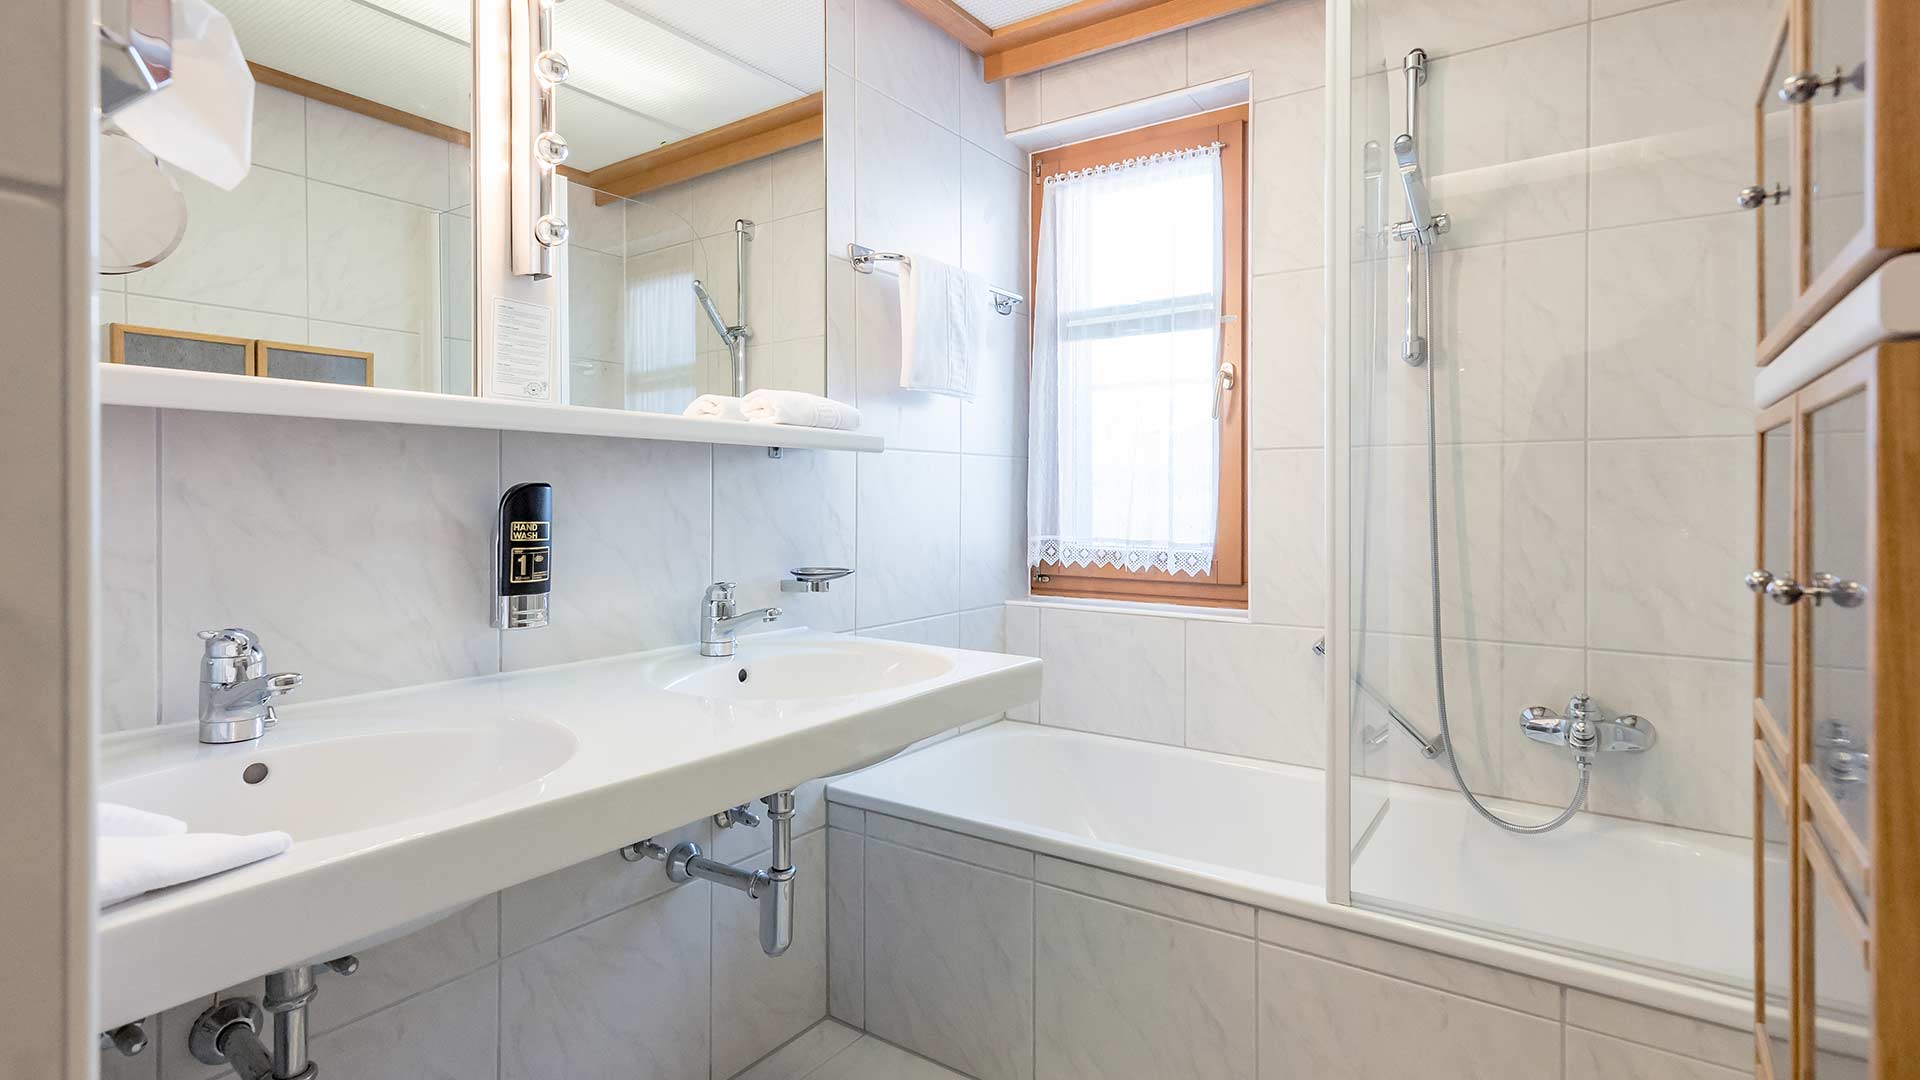 Spacious bath room with plenty storage facilities, bath tube, shower, double washing basing